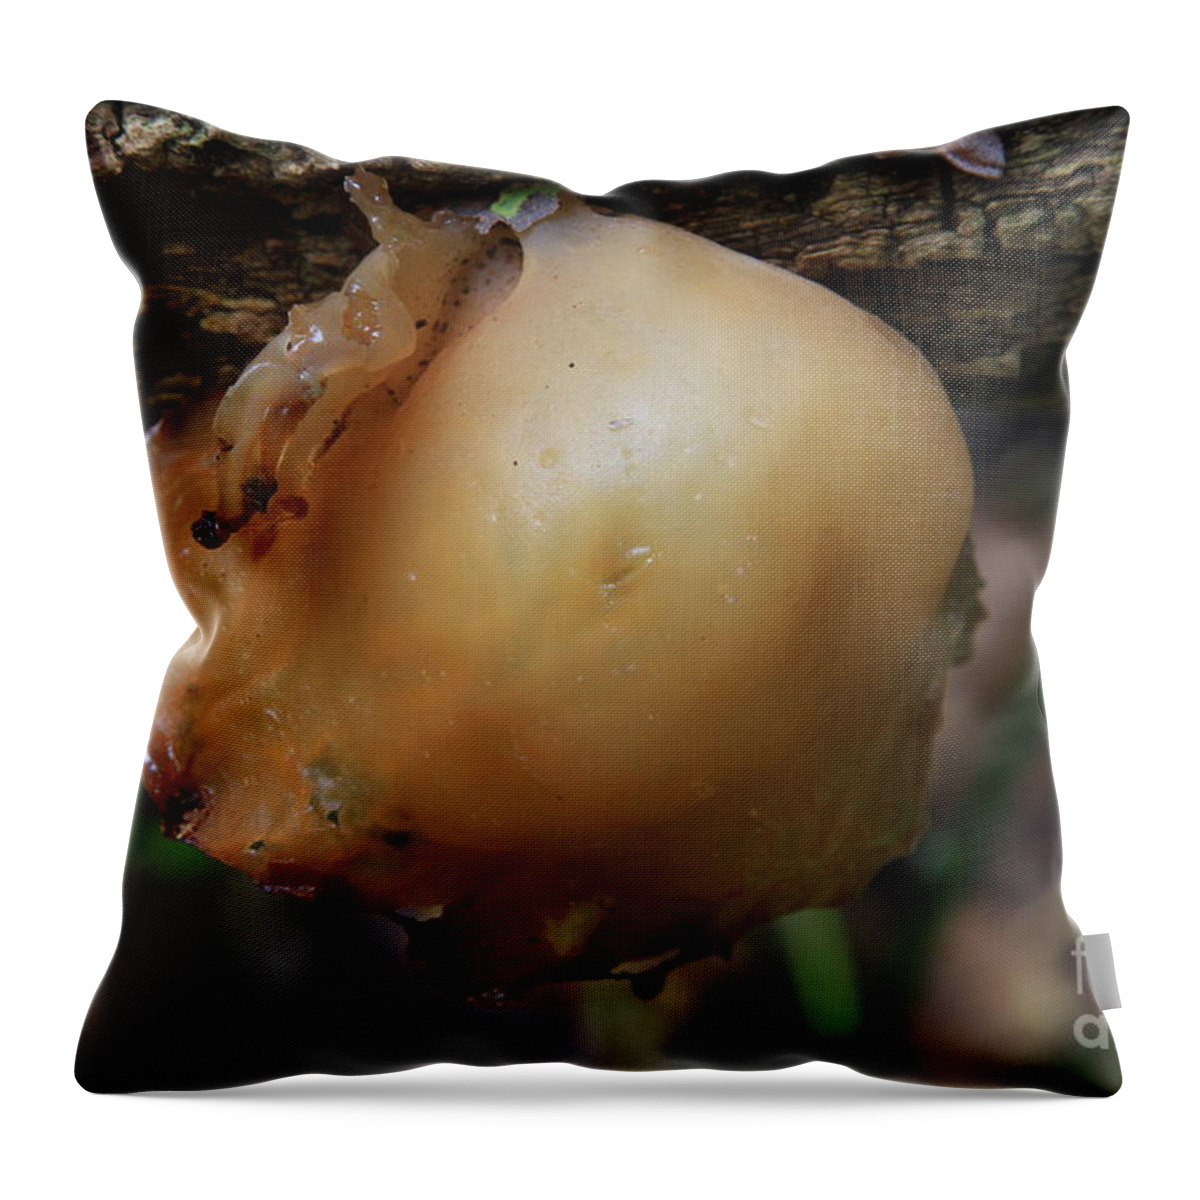 Fungus Throw Pillow featuring the photograph auricula judae/Wood Ear by Rick Rauzi